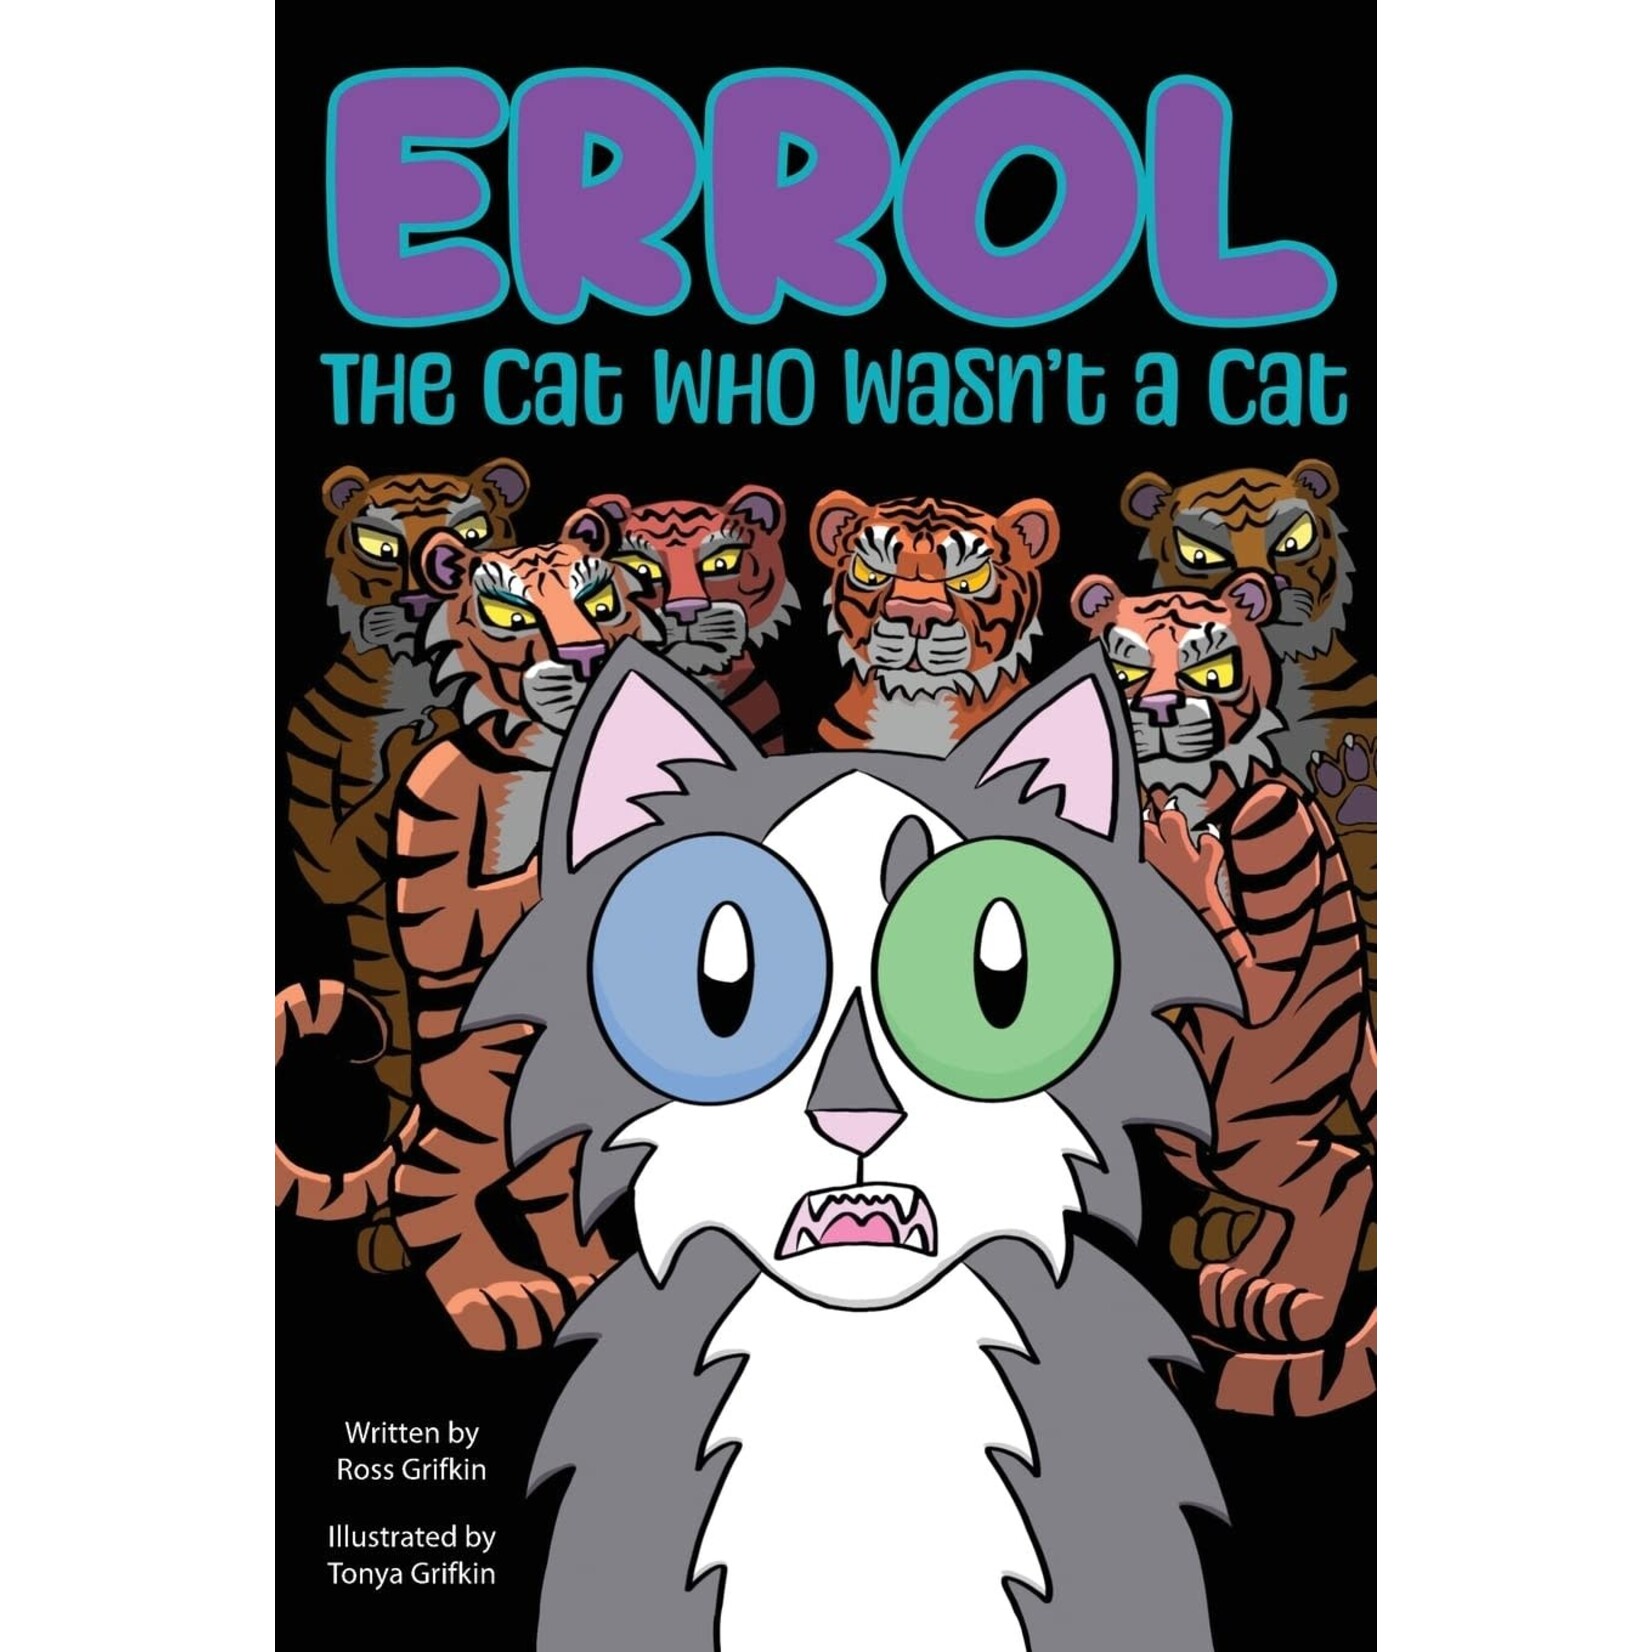 Errol: The Cat Who Wasn't a Cat